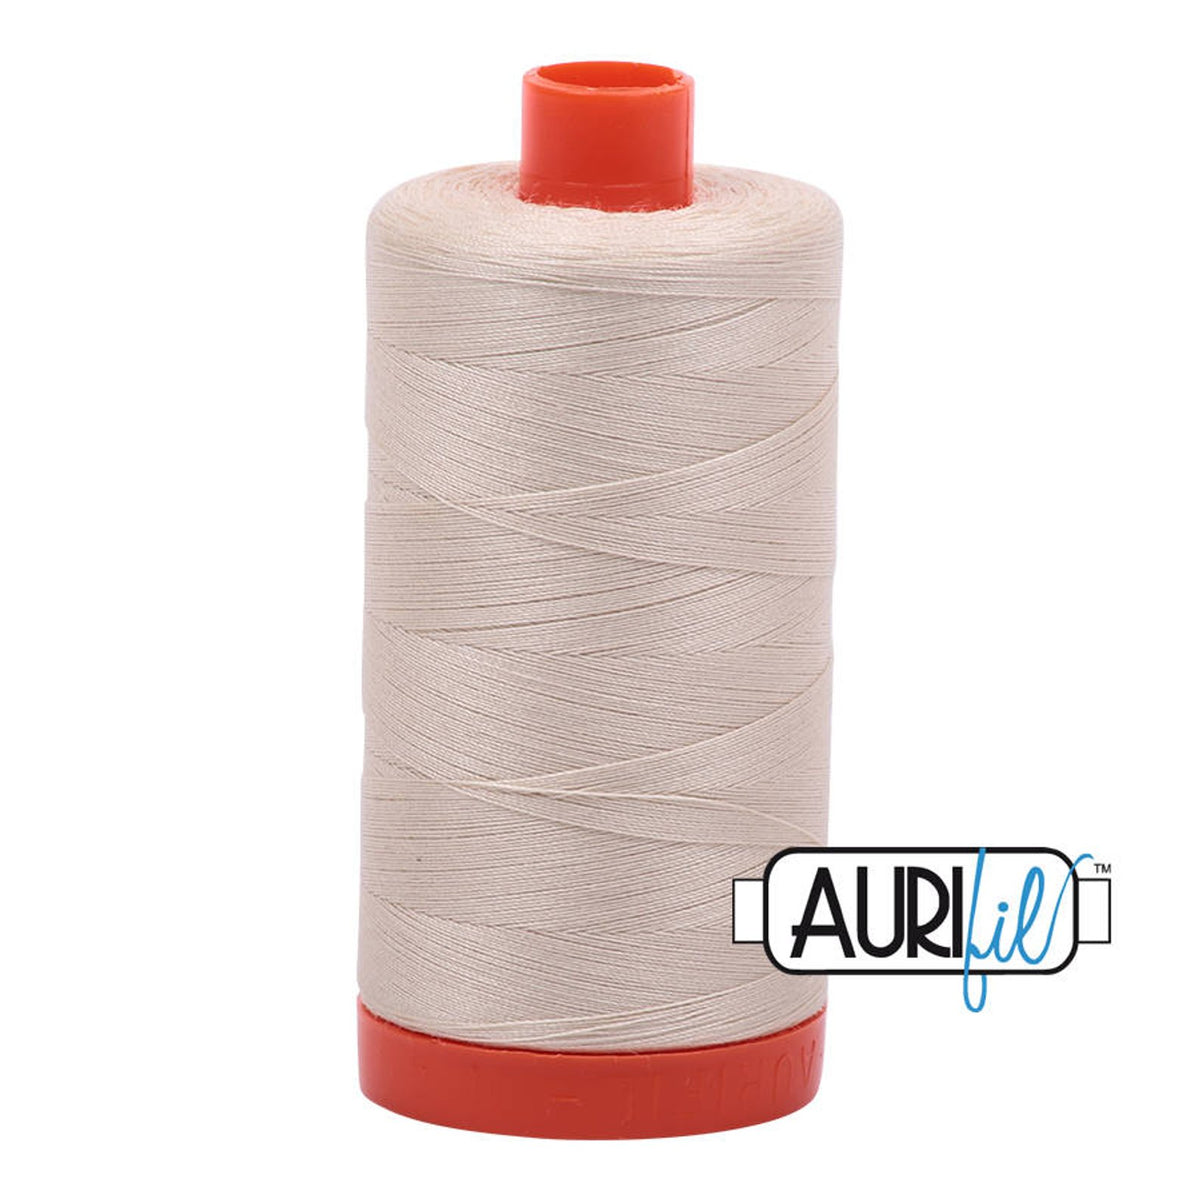 Aurifil 50 wt cotton thread, 1300m, Light Beige (2310)